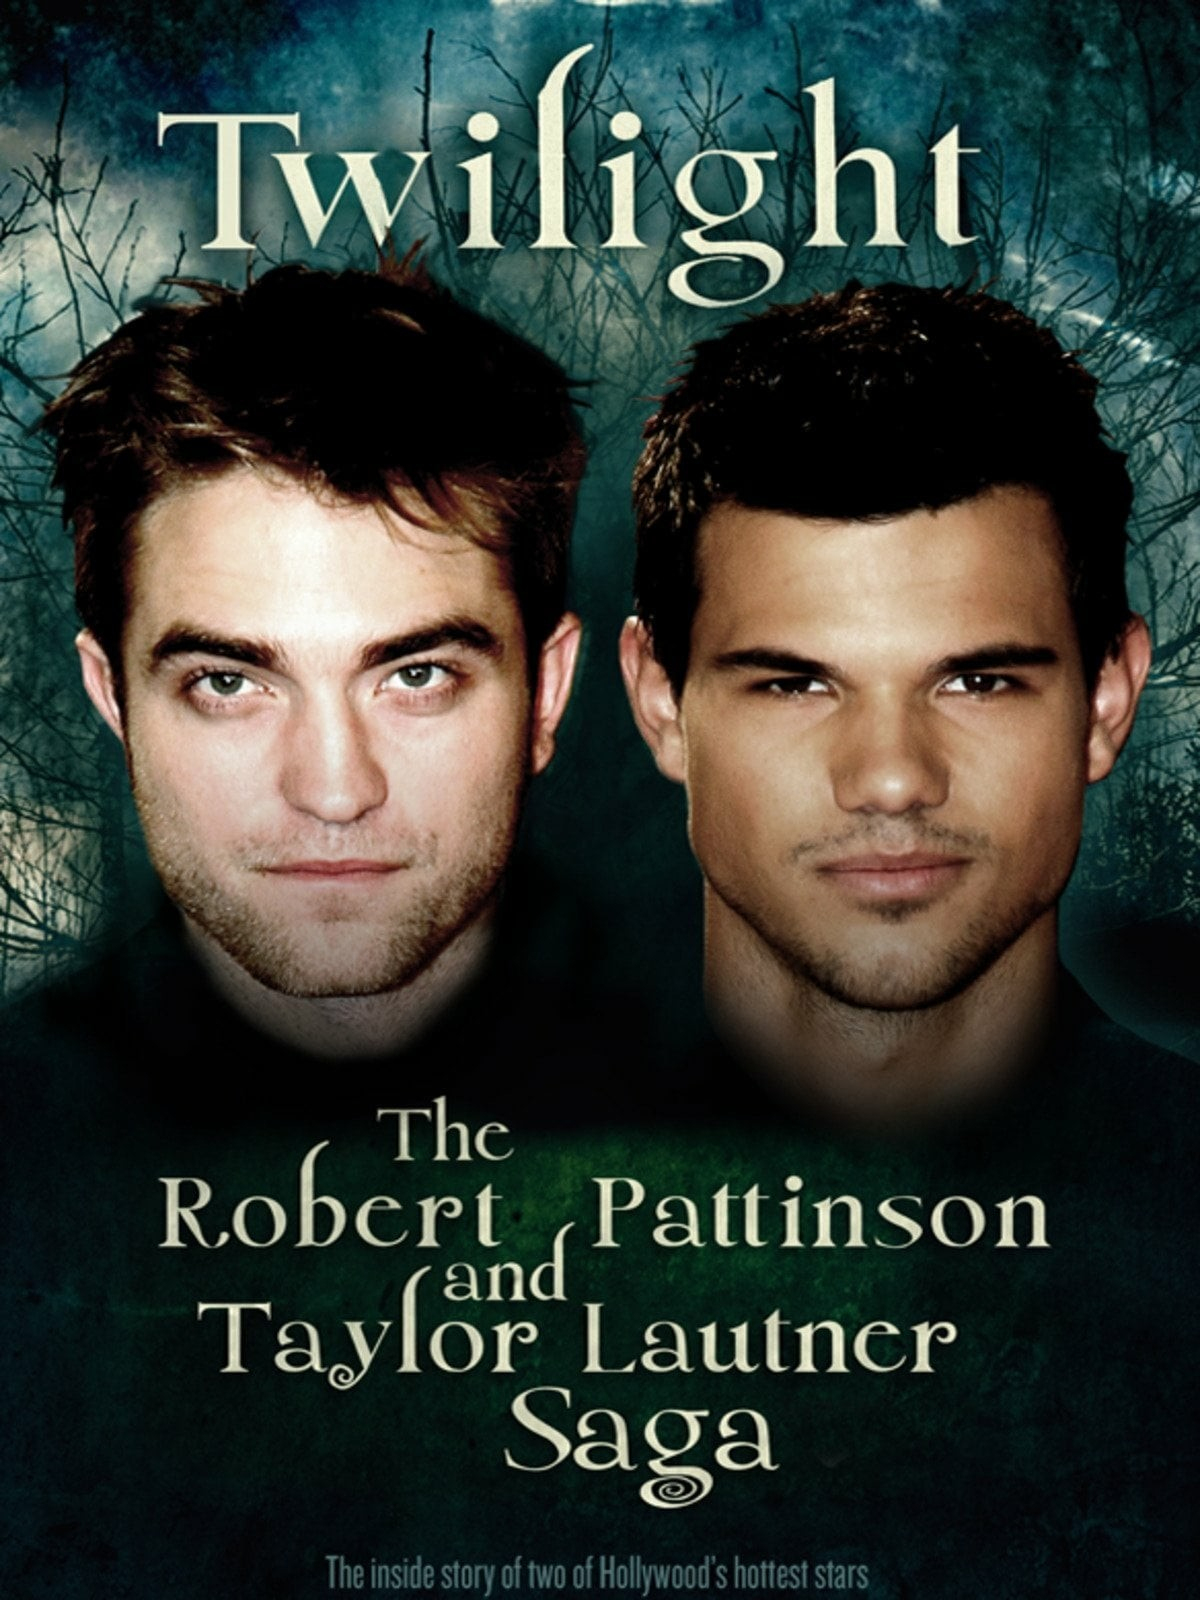 Twilight: The Taylor Lautner Saga (2012) Streaming Complet tout Twilight Gratuit 